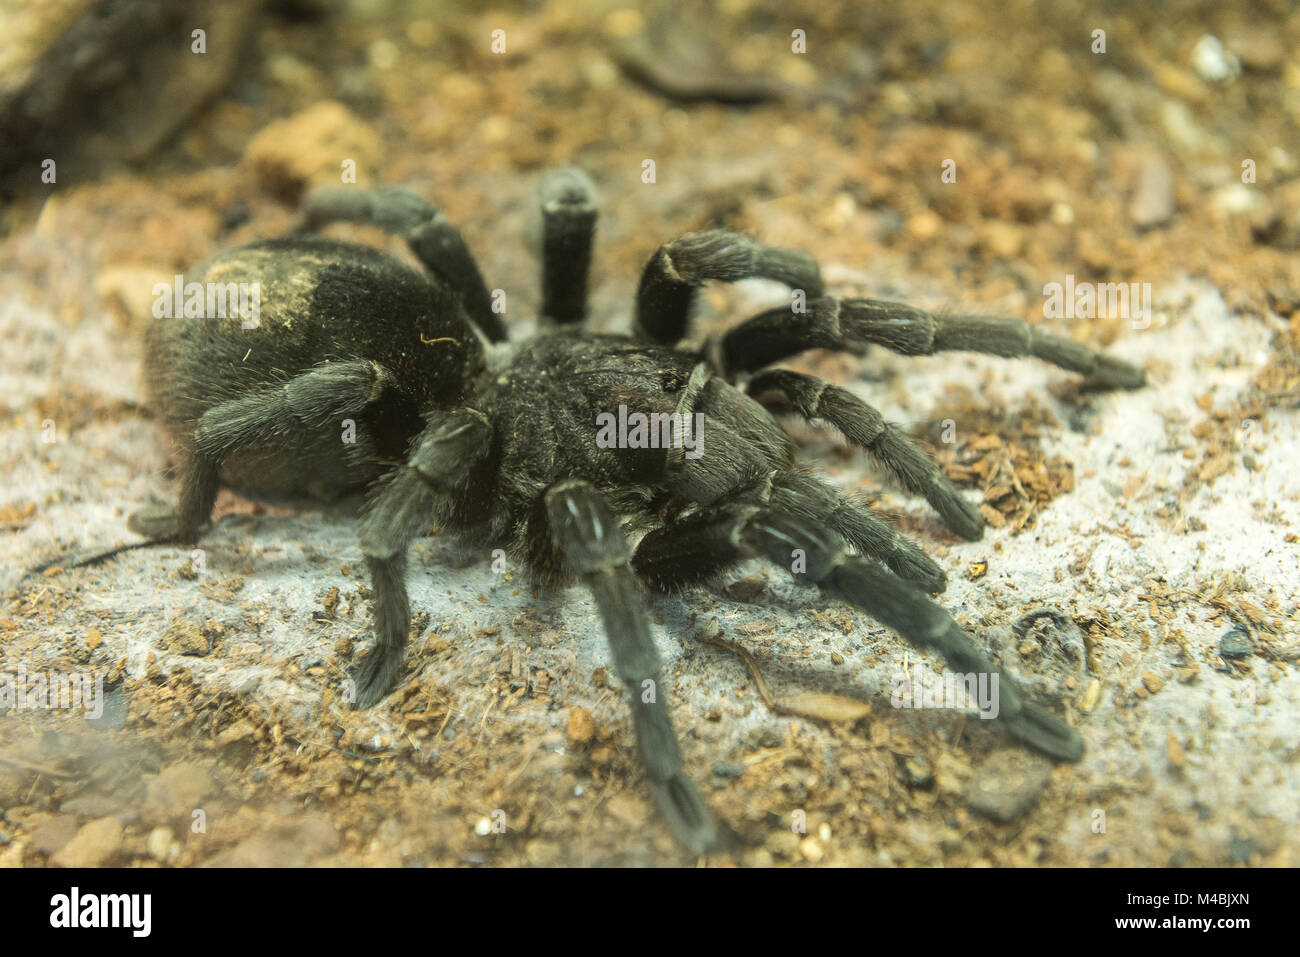 Brazilian black tarantula found in Brazil and Uruguay Stock Photo